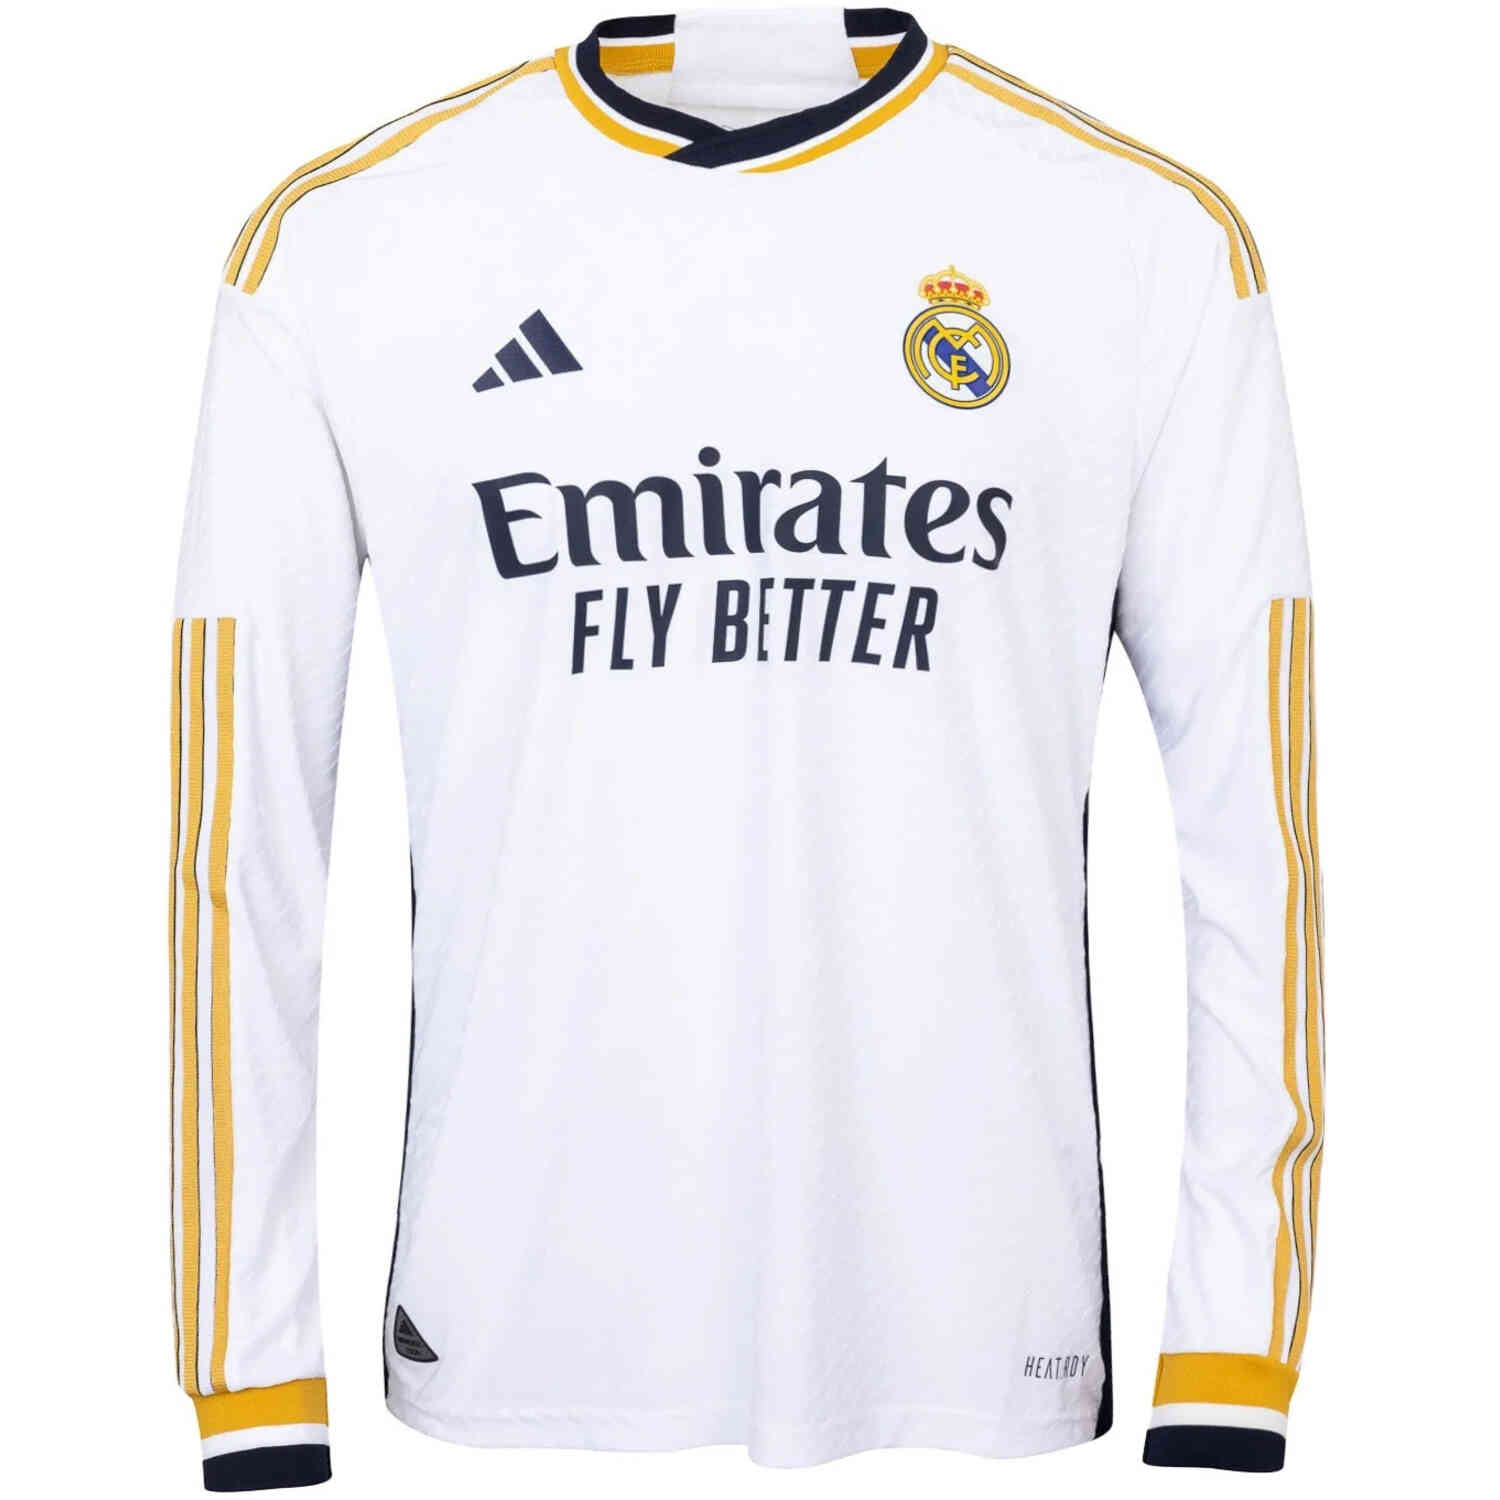 Real Madrid Women Soccer Jersey. White T-Shirt - China Women Soccer Jersey  and T-Shirt price